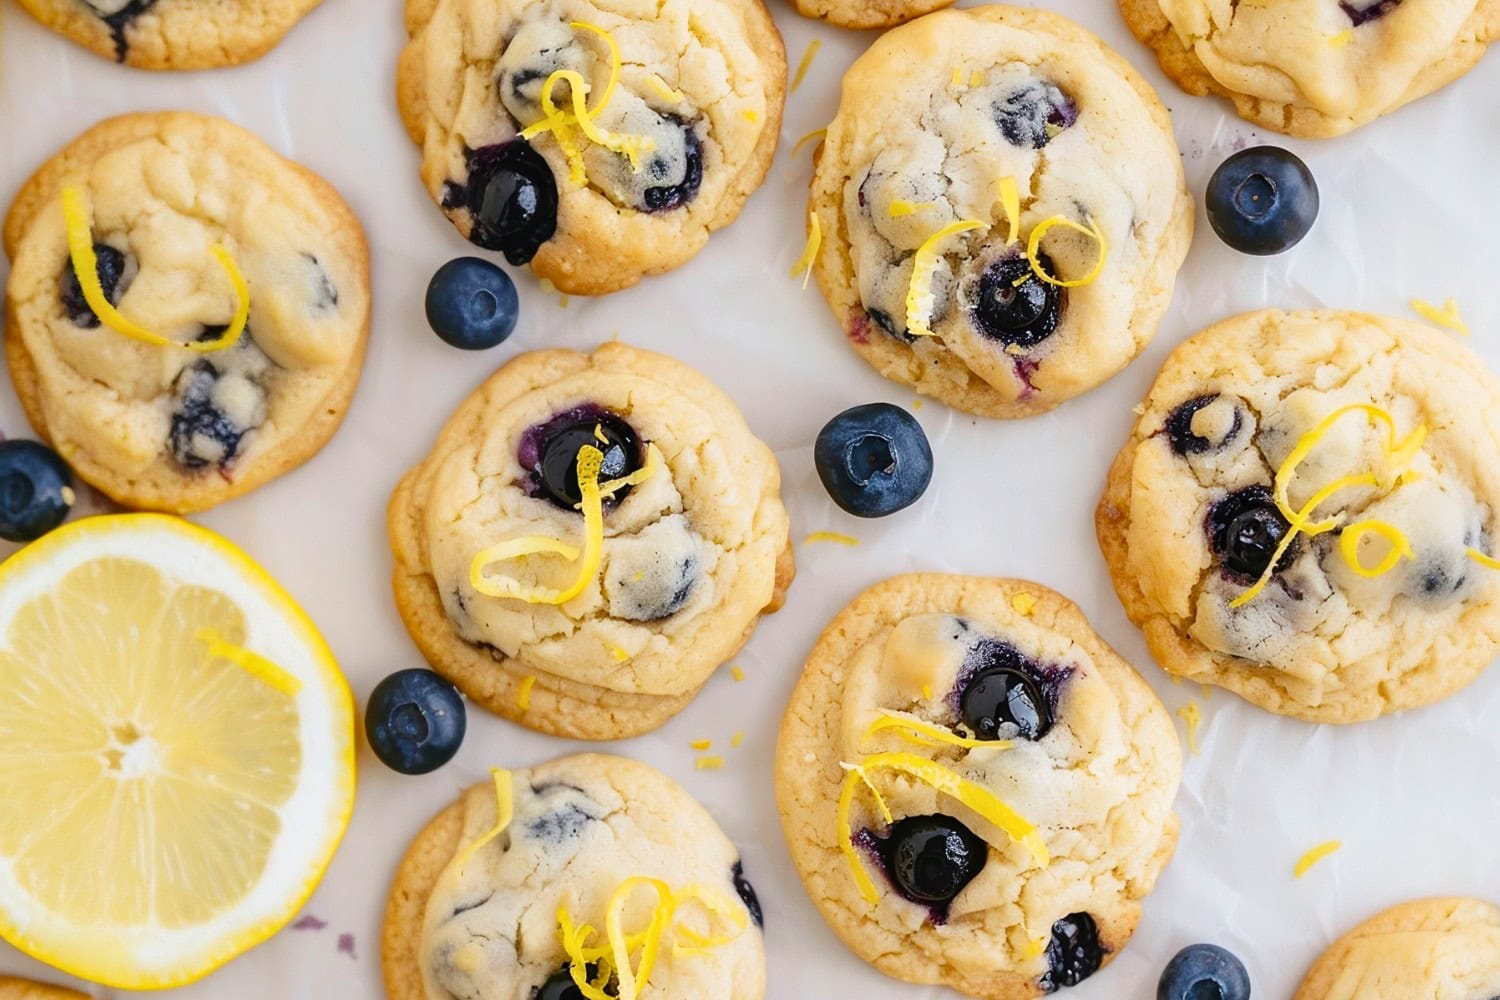 Lemon blueberry cookies sprinkled with lemon zest.